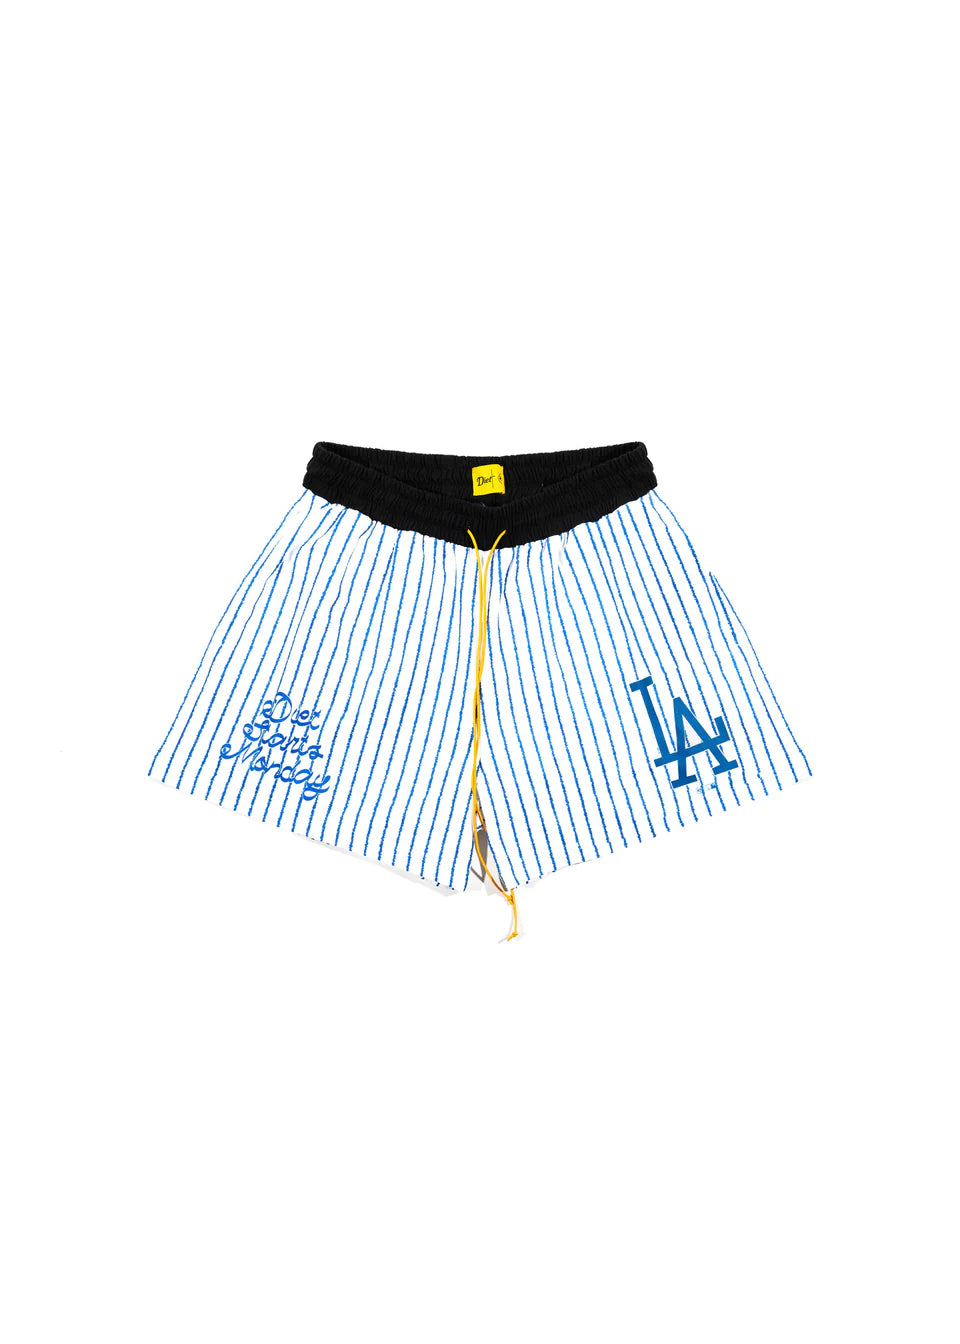 Dodgers Pinstripe Shorts